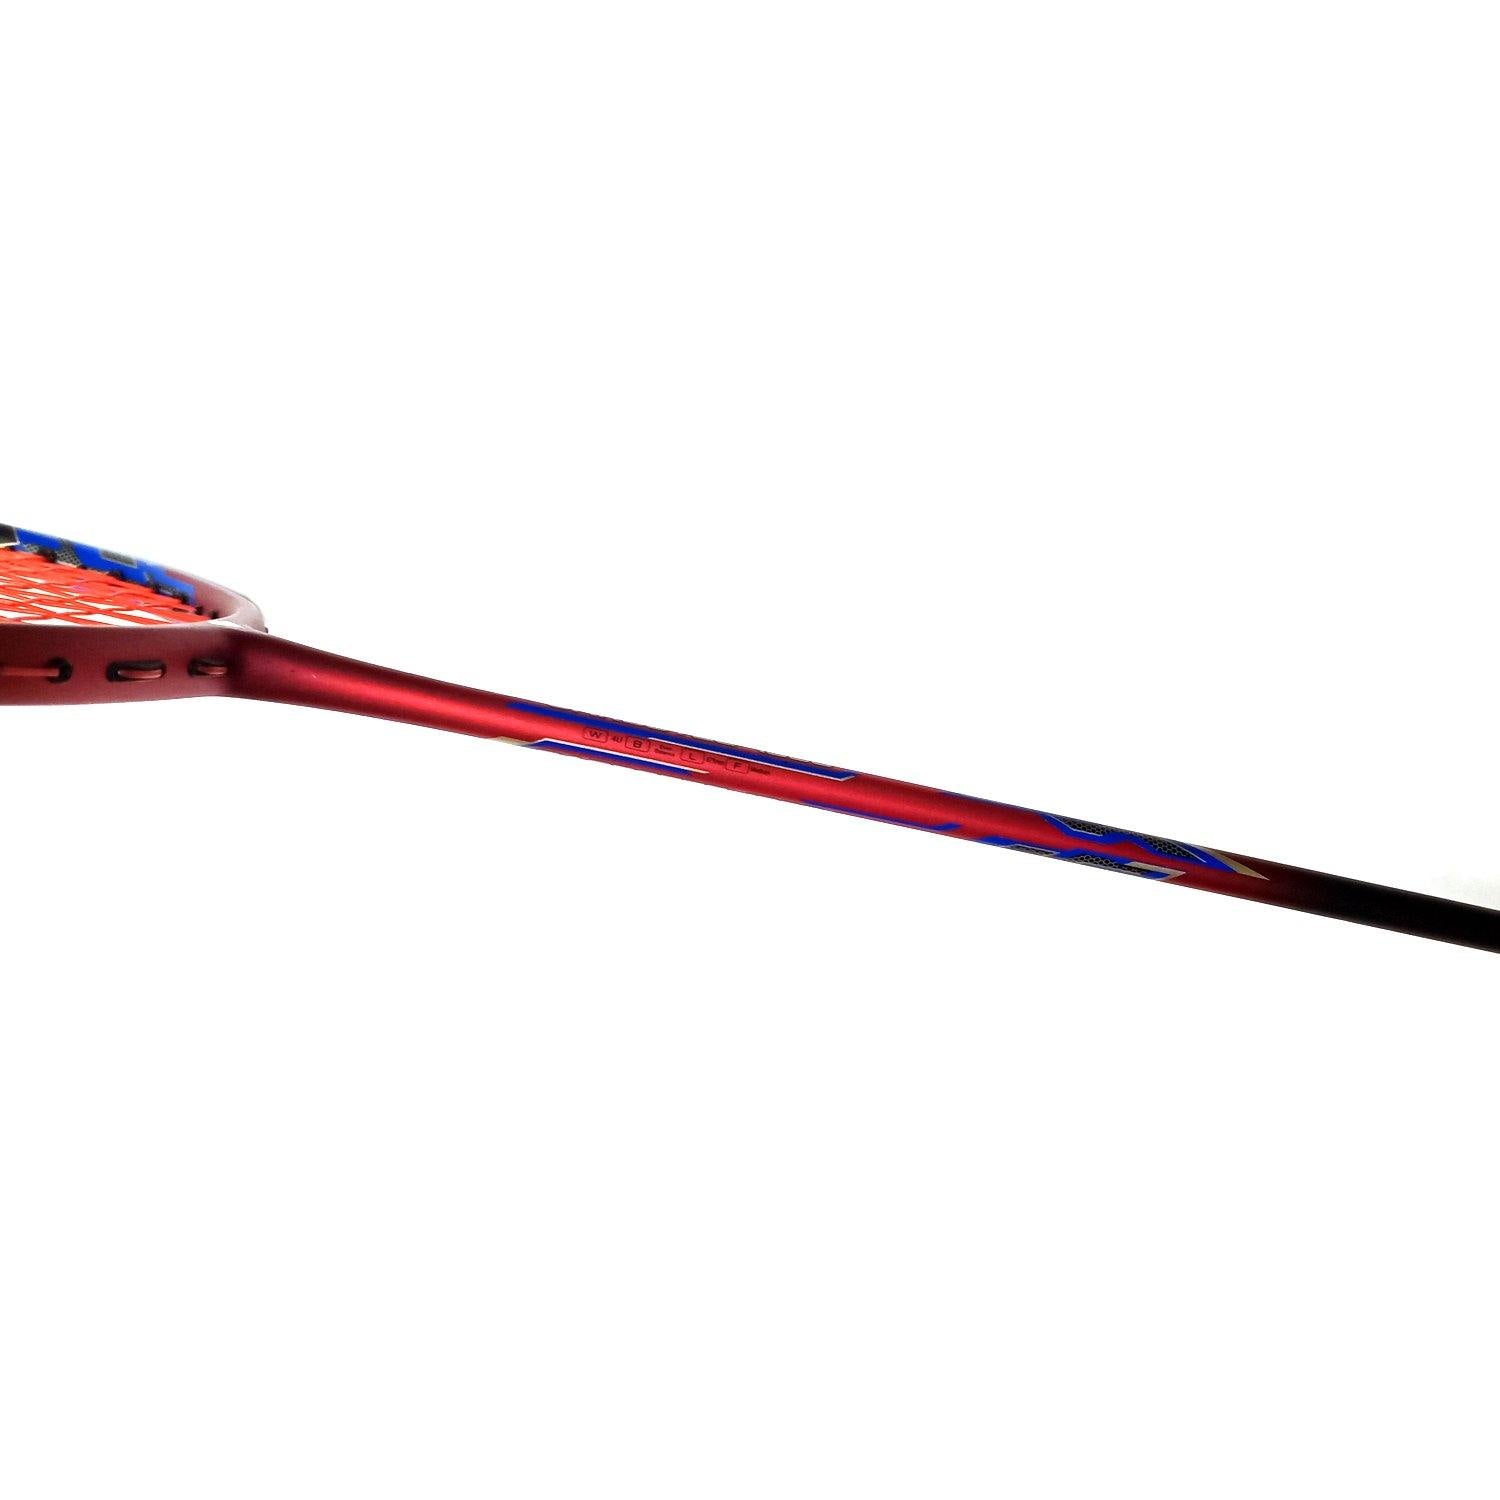 Carlton Carbotec 1300 High Flex Strung Badminton Racquet - Red - Best Price online Prokicksports.com